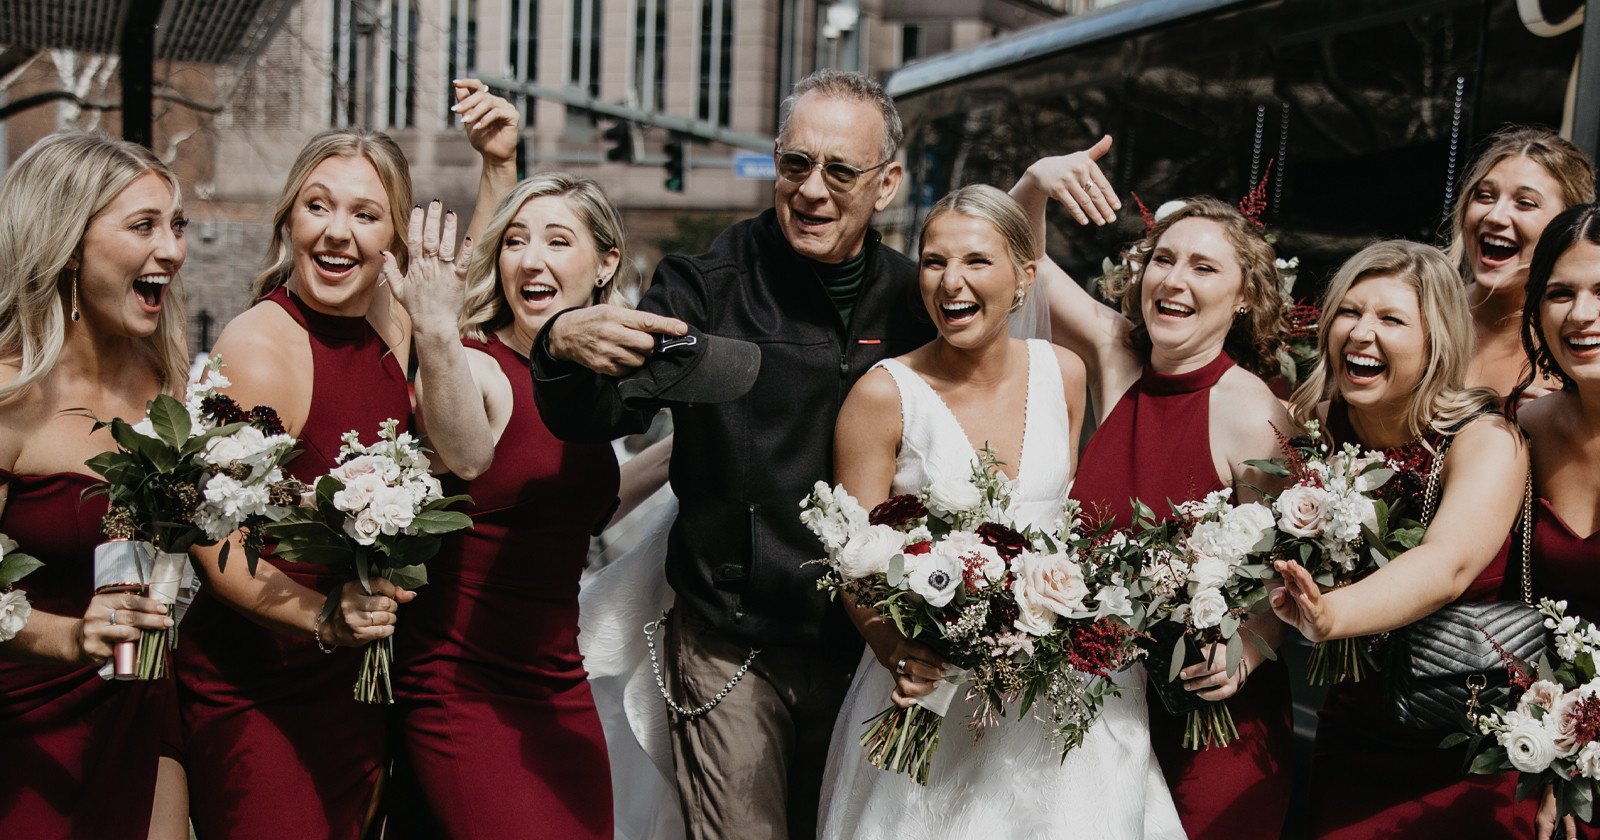 Tom Hanks Photobombs Brides Wedding Photos